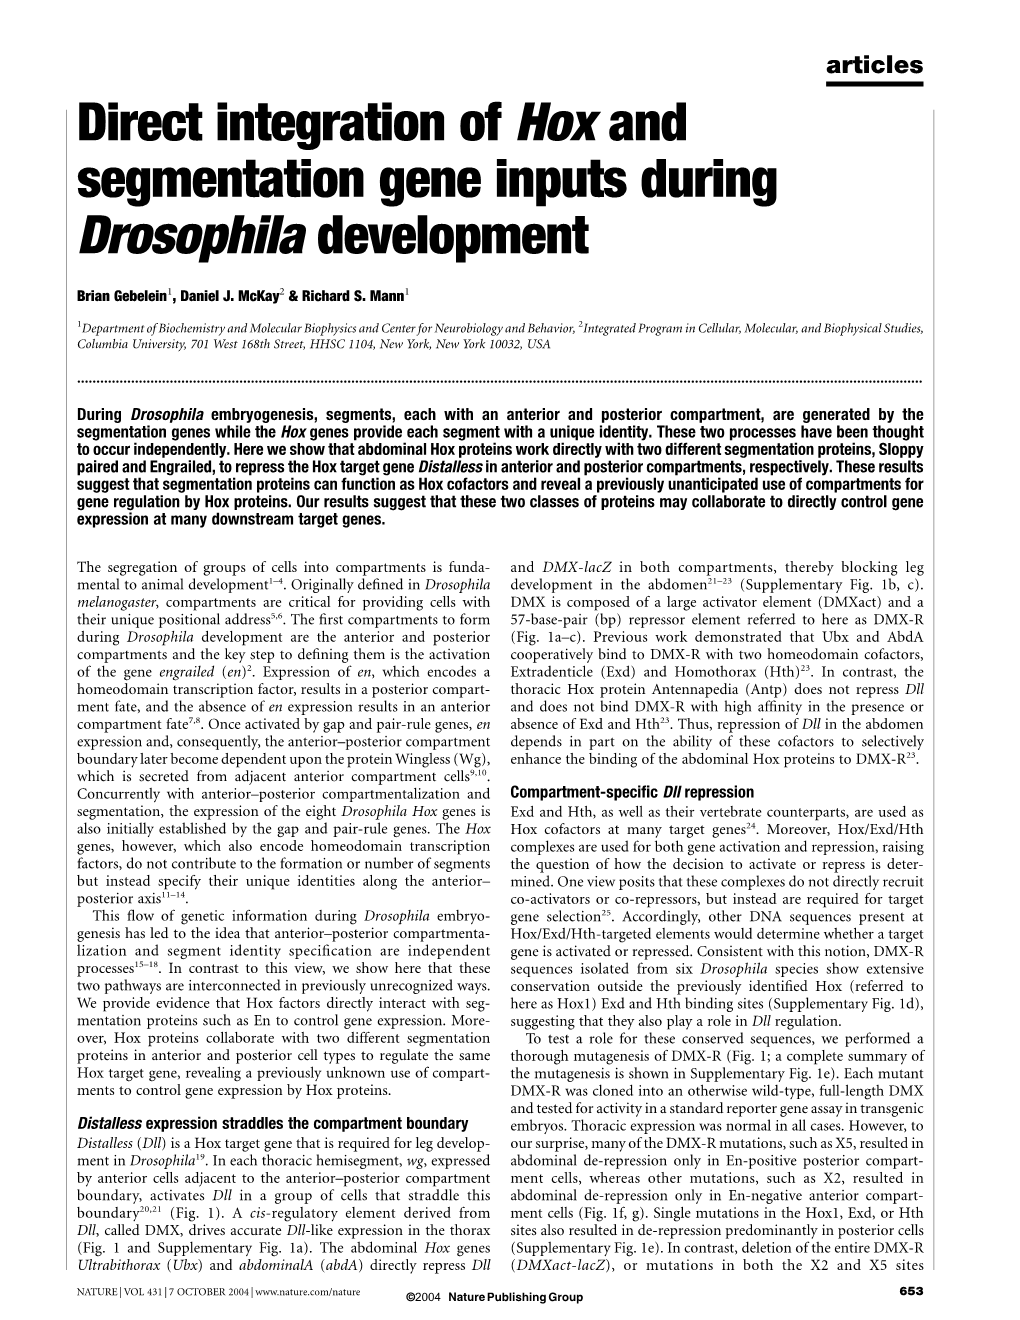 Direct Integration of Hox and Segmentation Gene Inputs During Drosophila Development